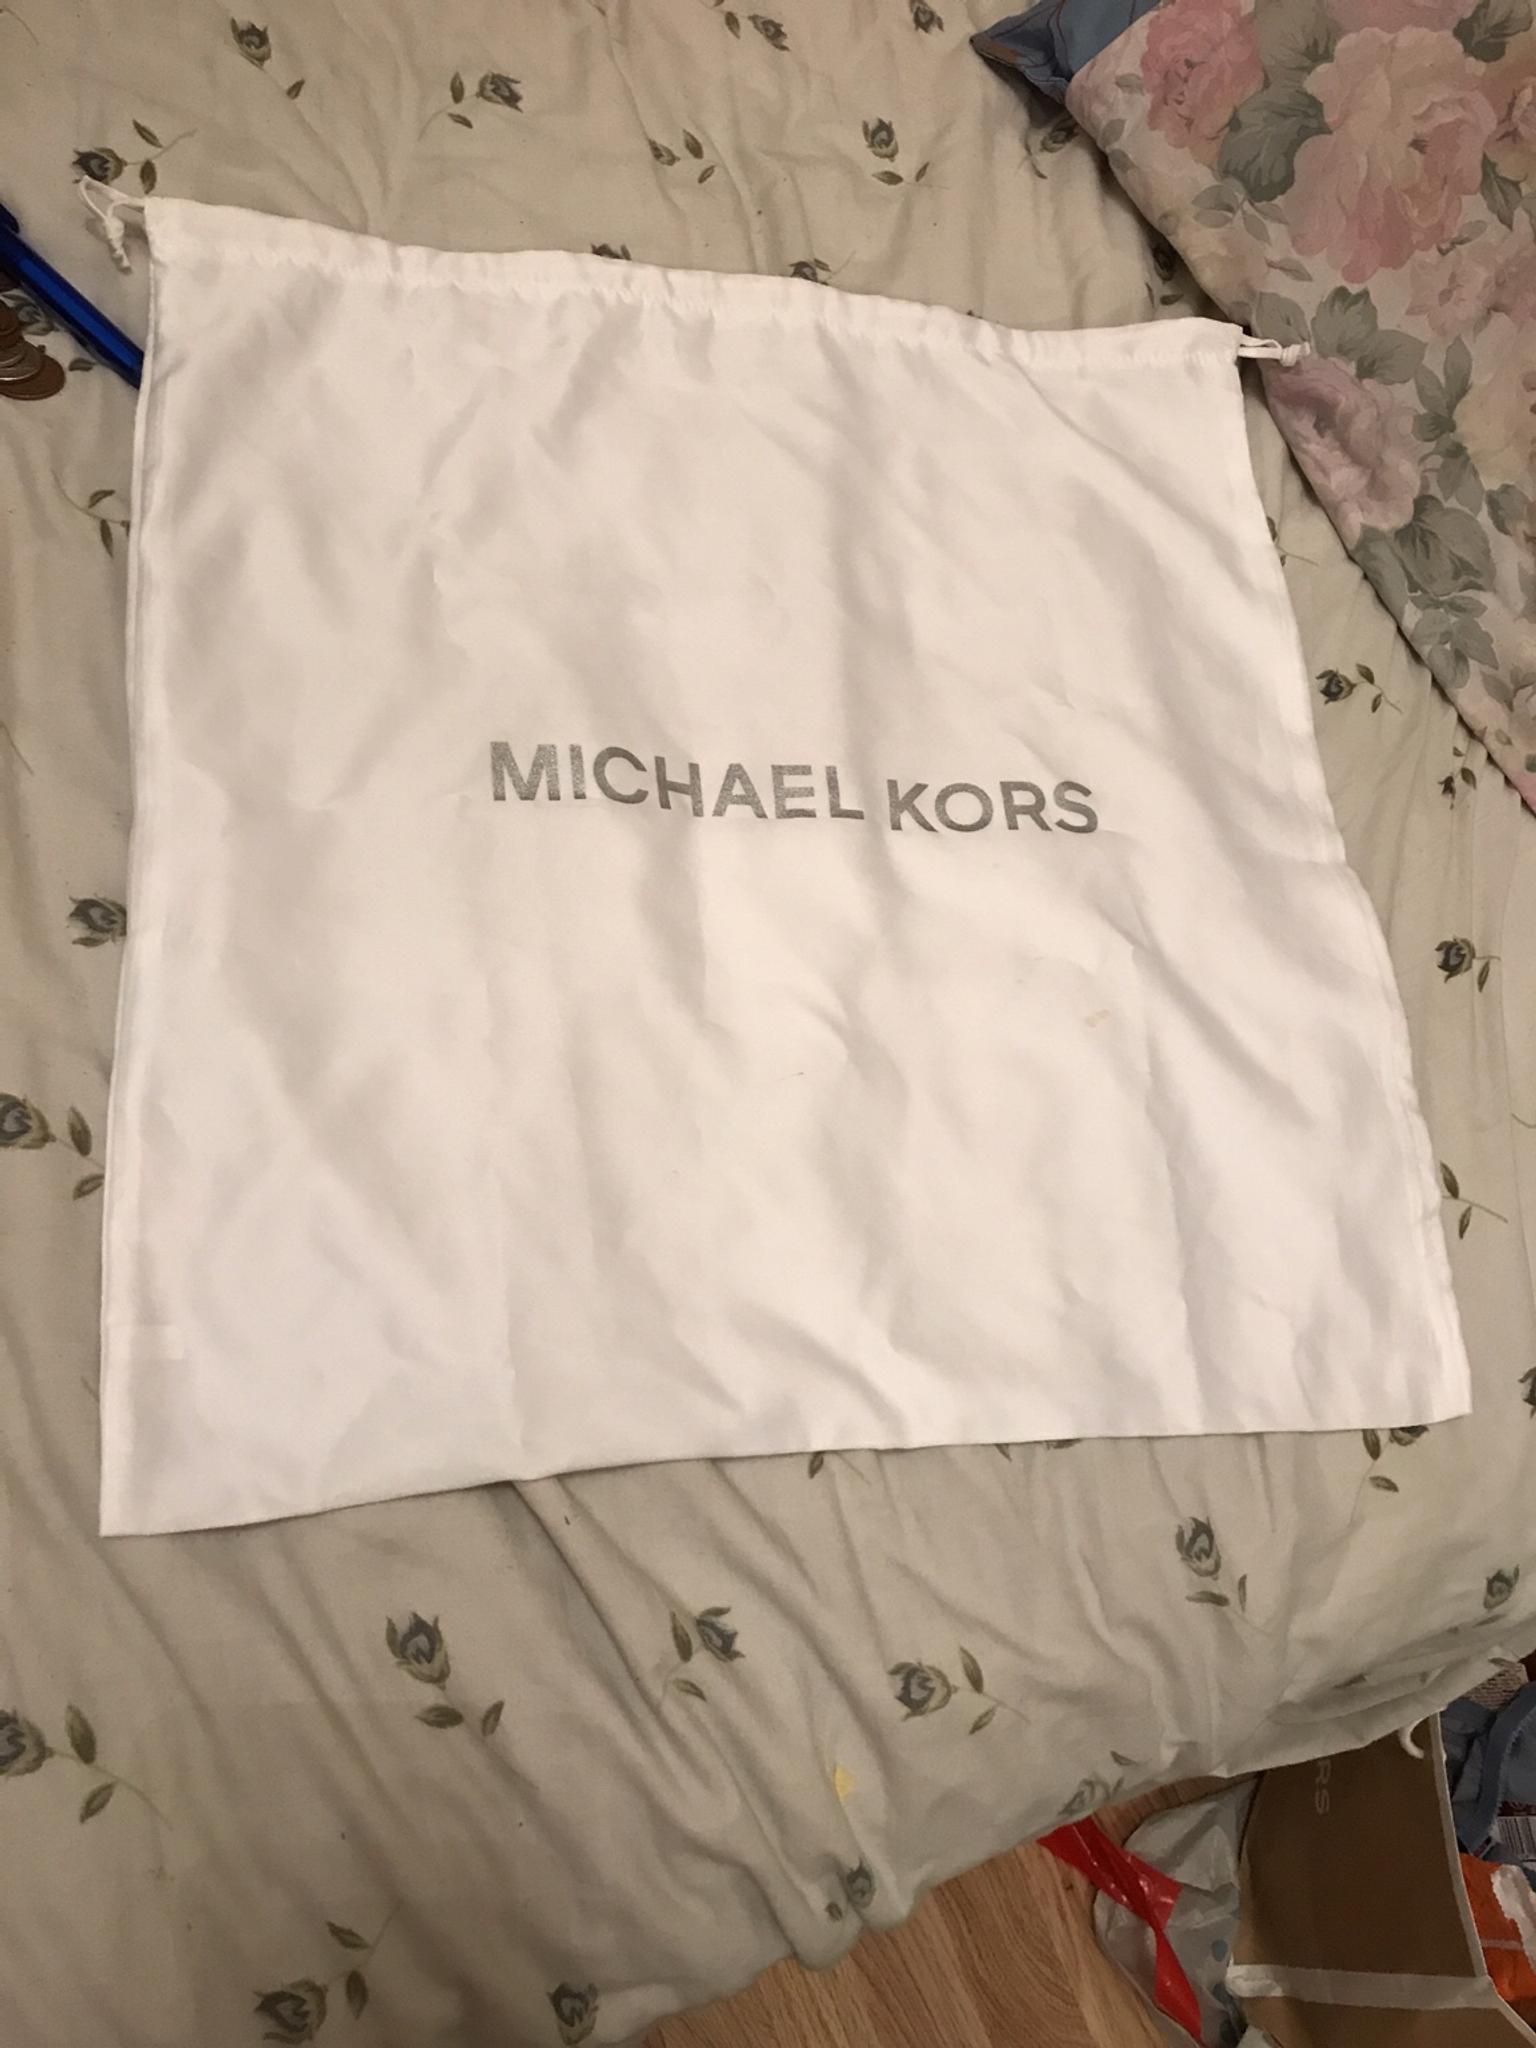 Michael kors dust bag in W10 Chelsea 